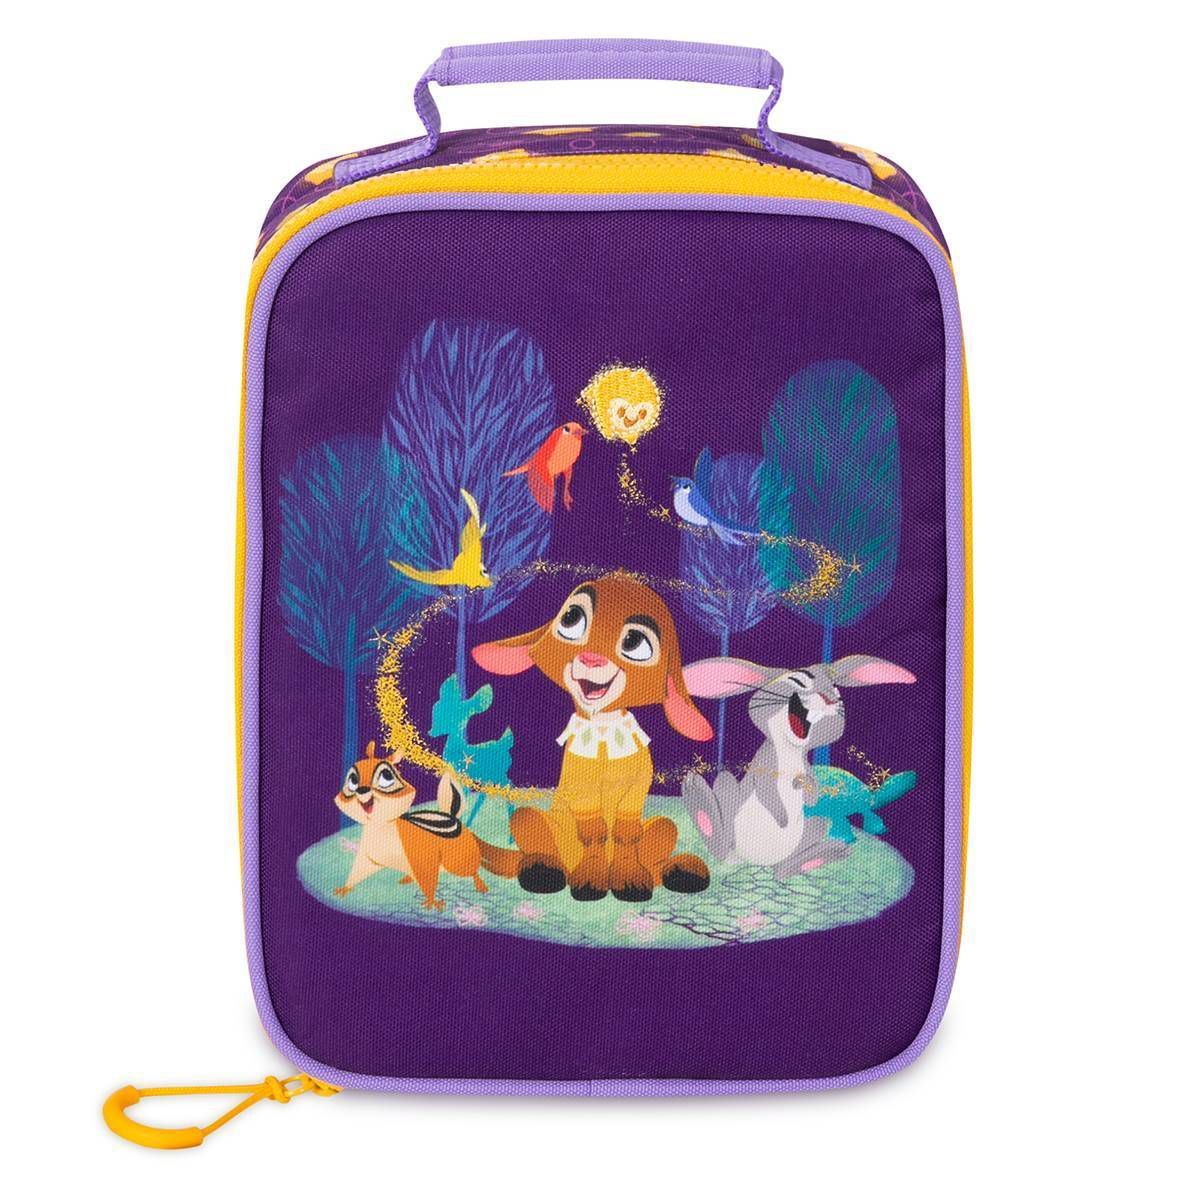 Wish Kids' Lunch Bag | Target